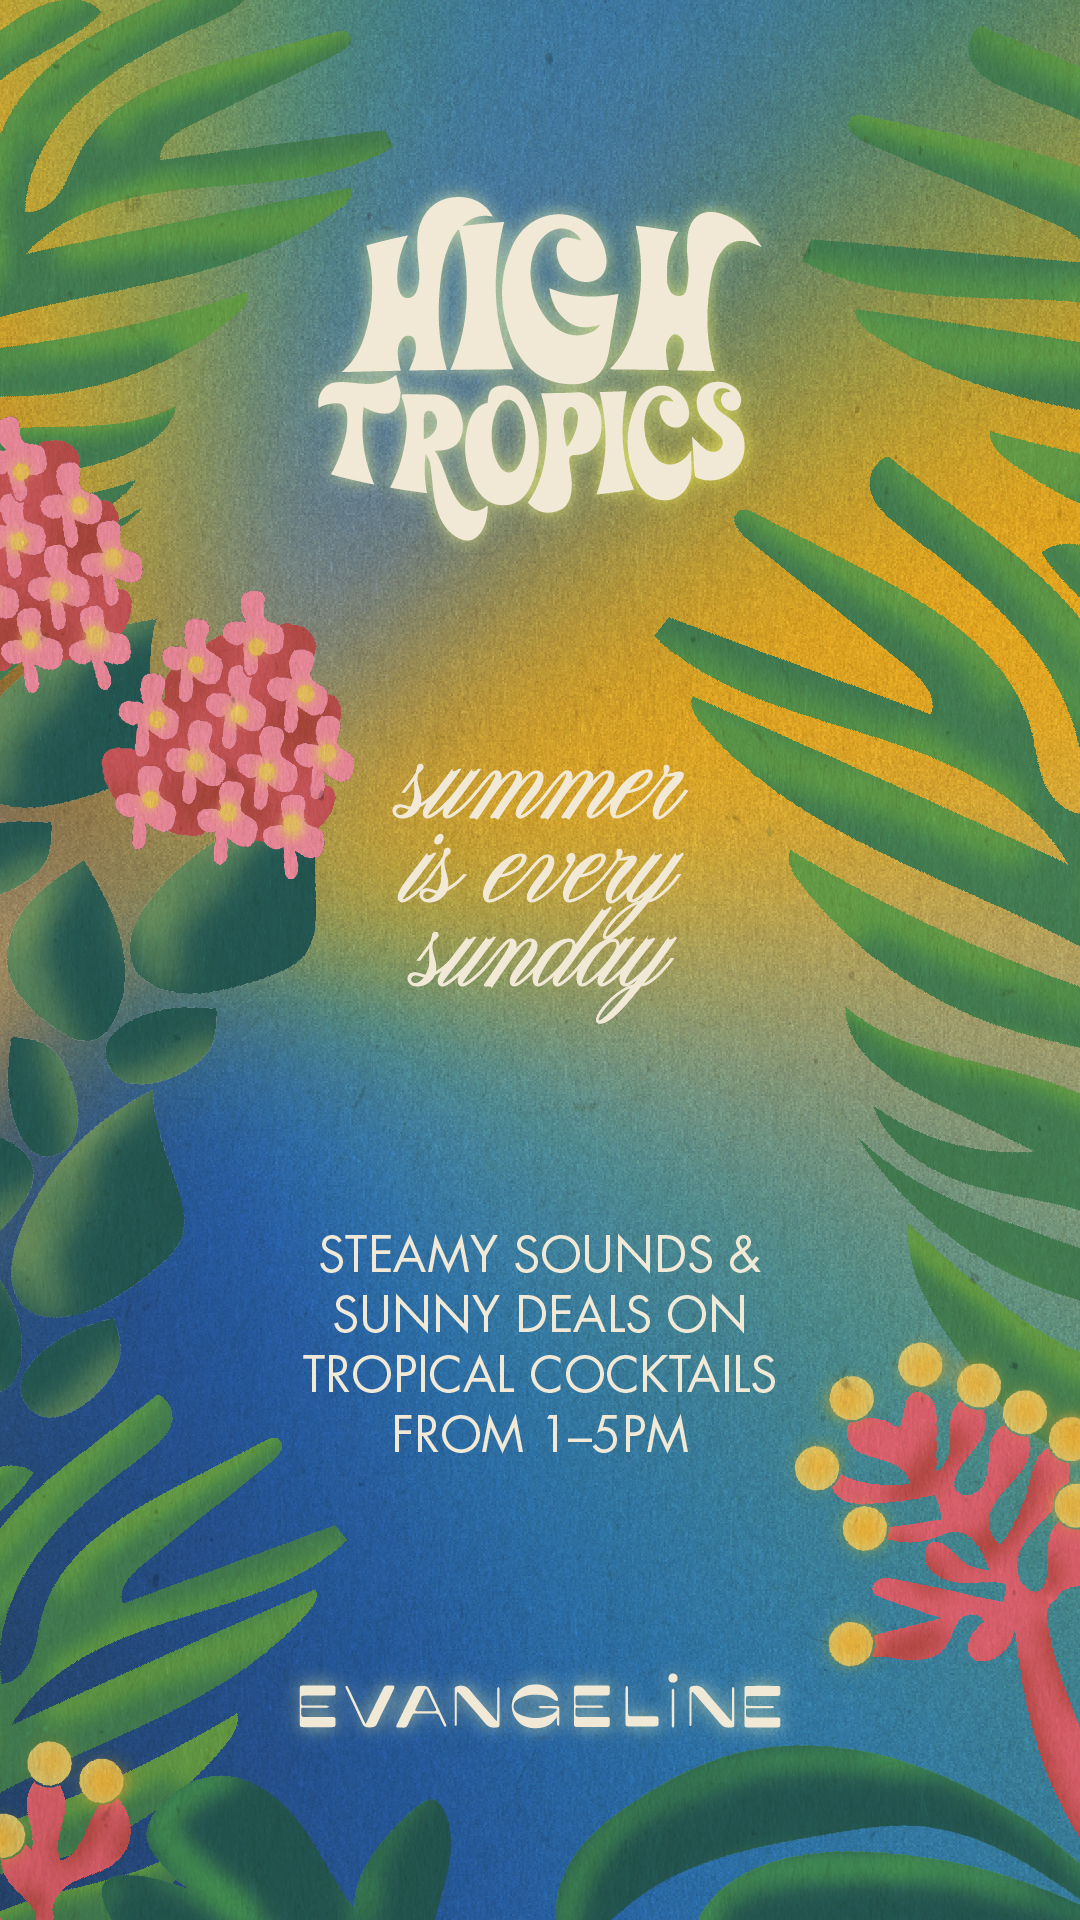 High Tropics - Summer is every Sunday - Evangeline